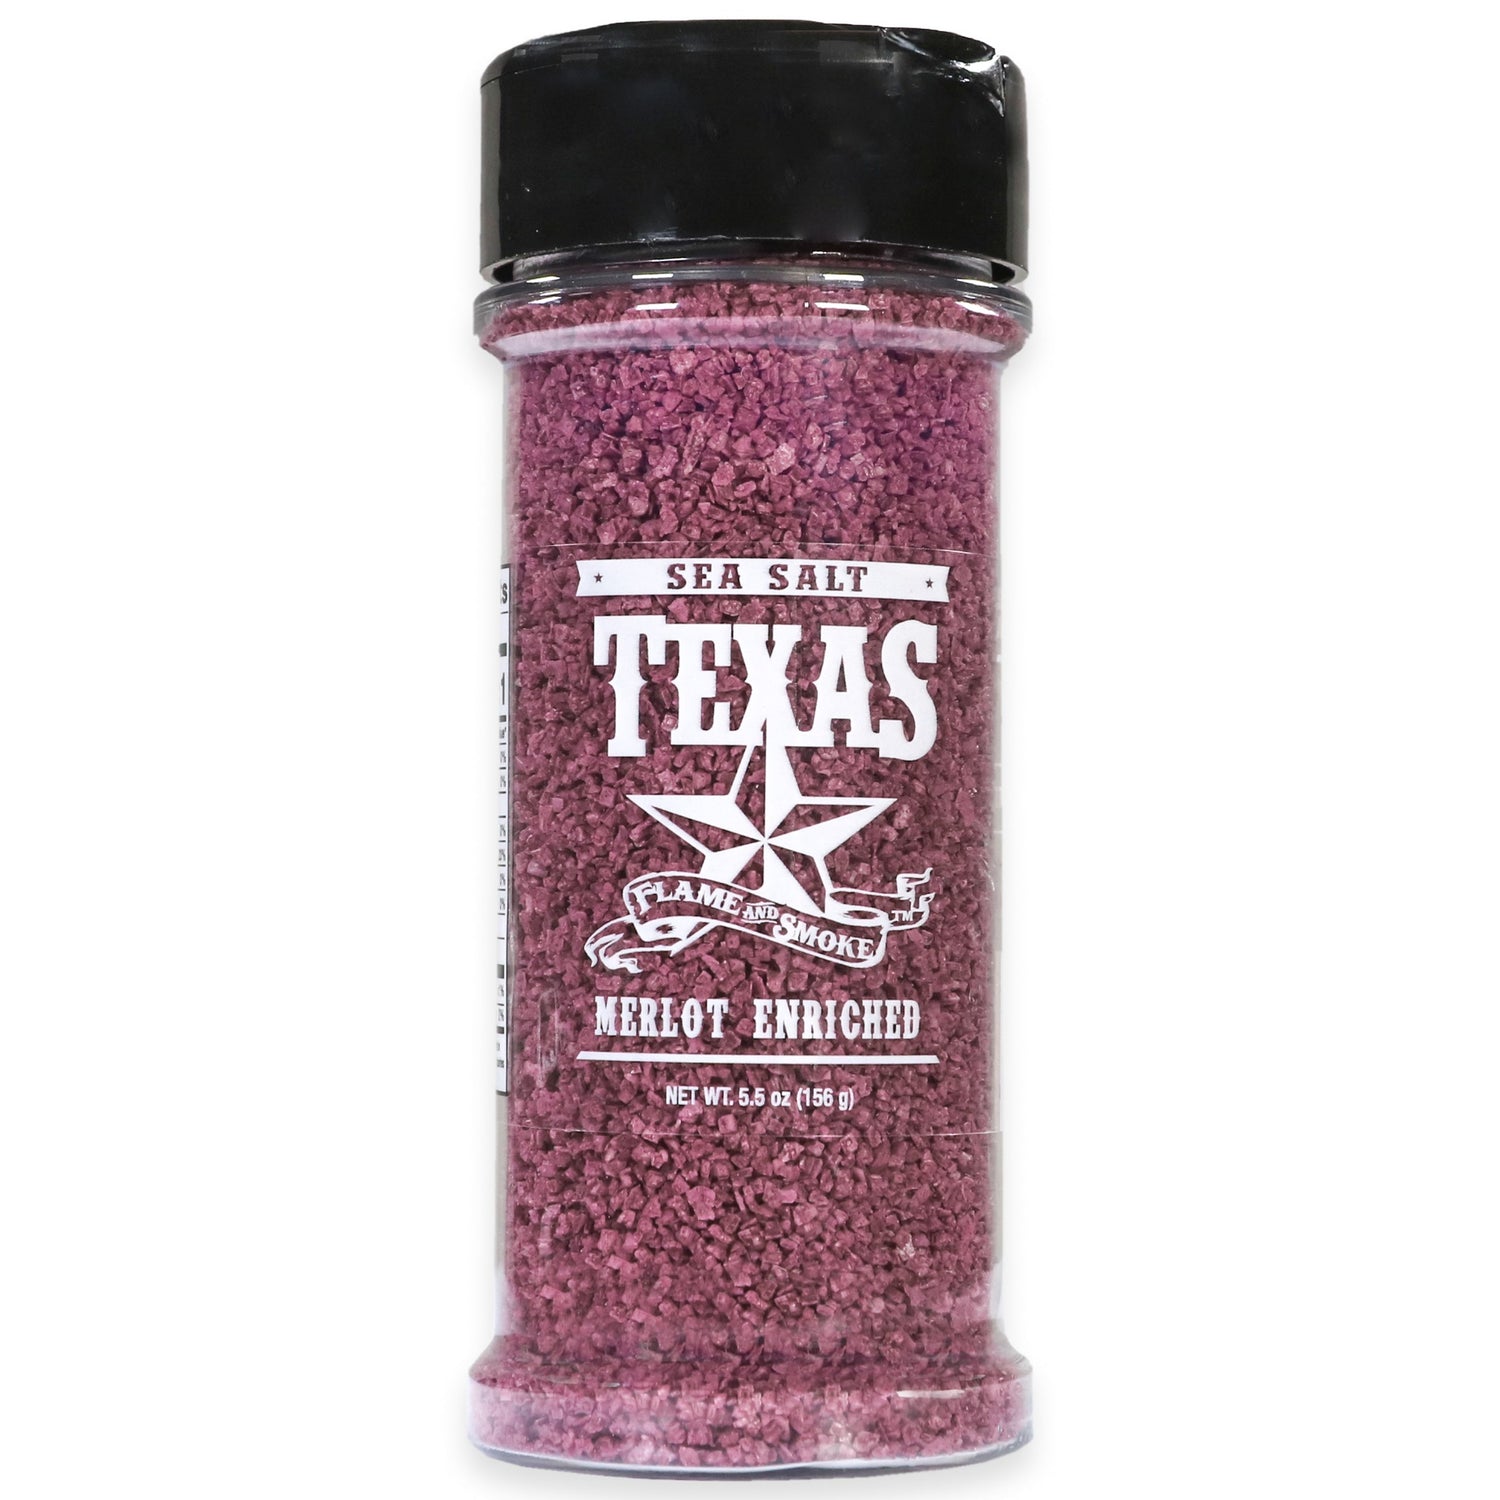 Texas Flame and Smoke Merlot Enriched Sea Salt